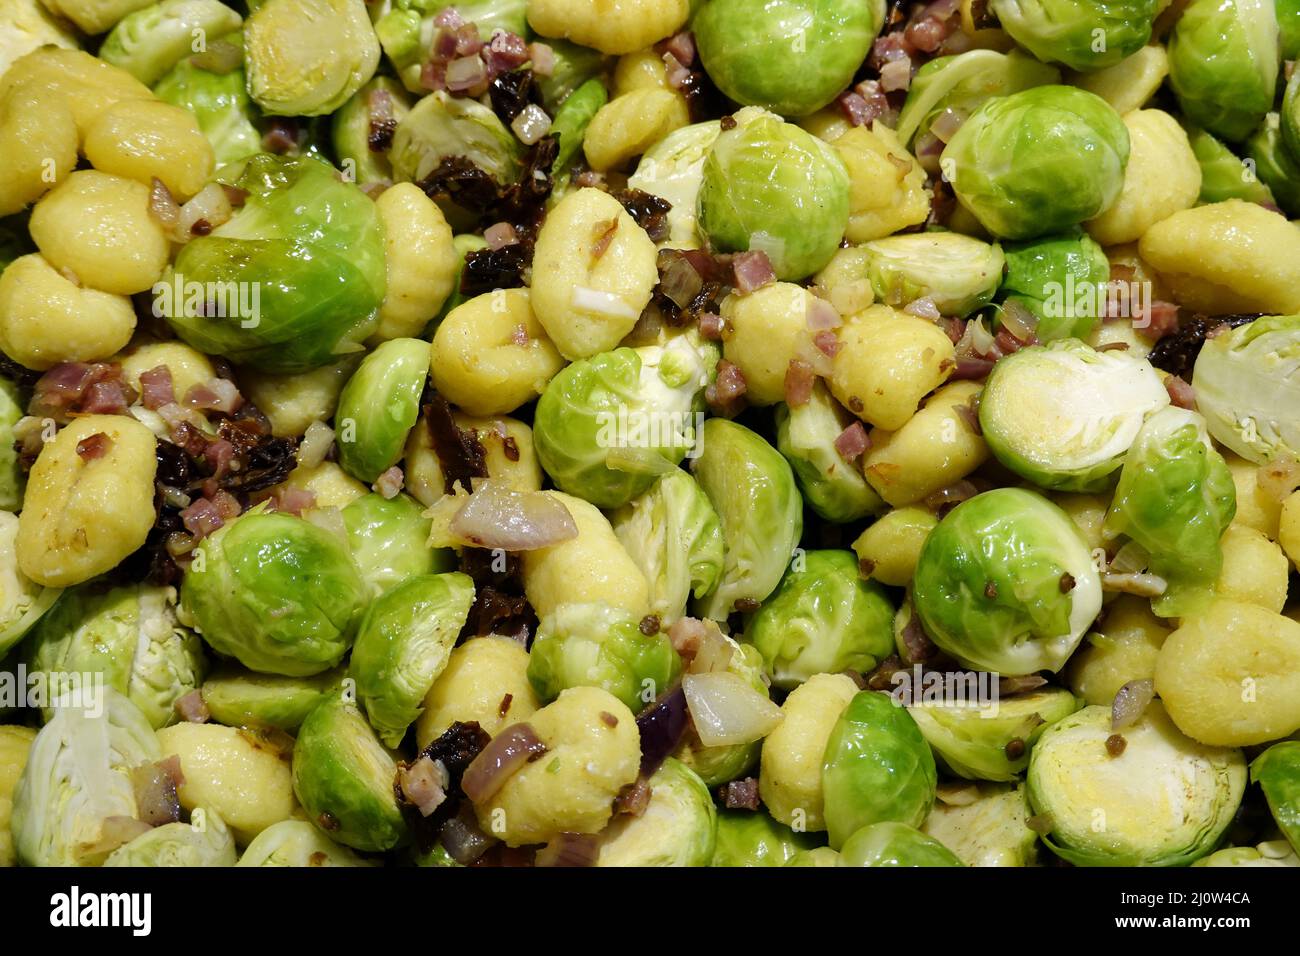 Brussels sprouts (Brassica oleracea var. gemmifera) in a pan Stock Photo